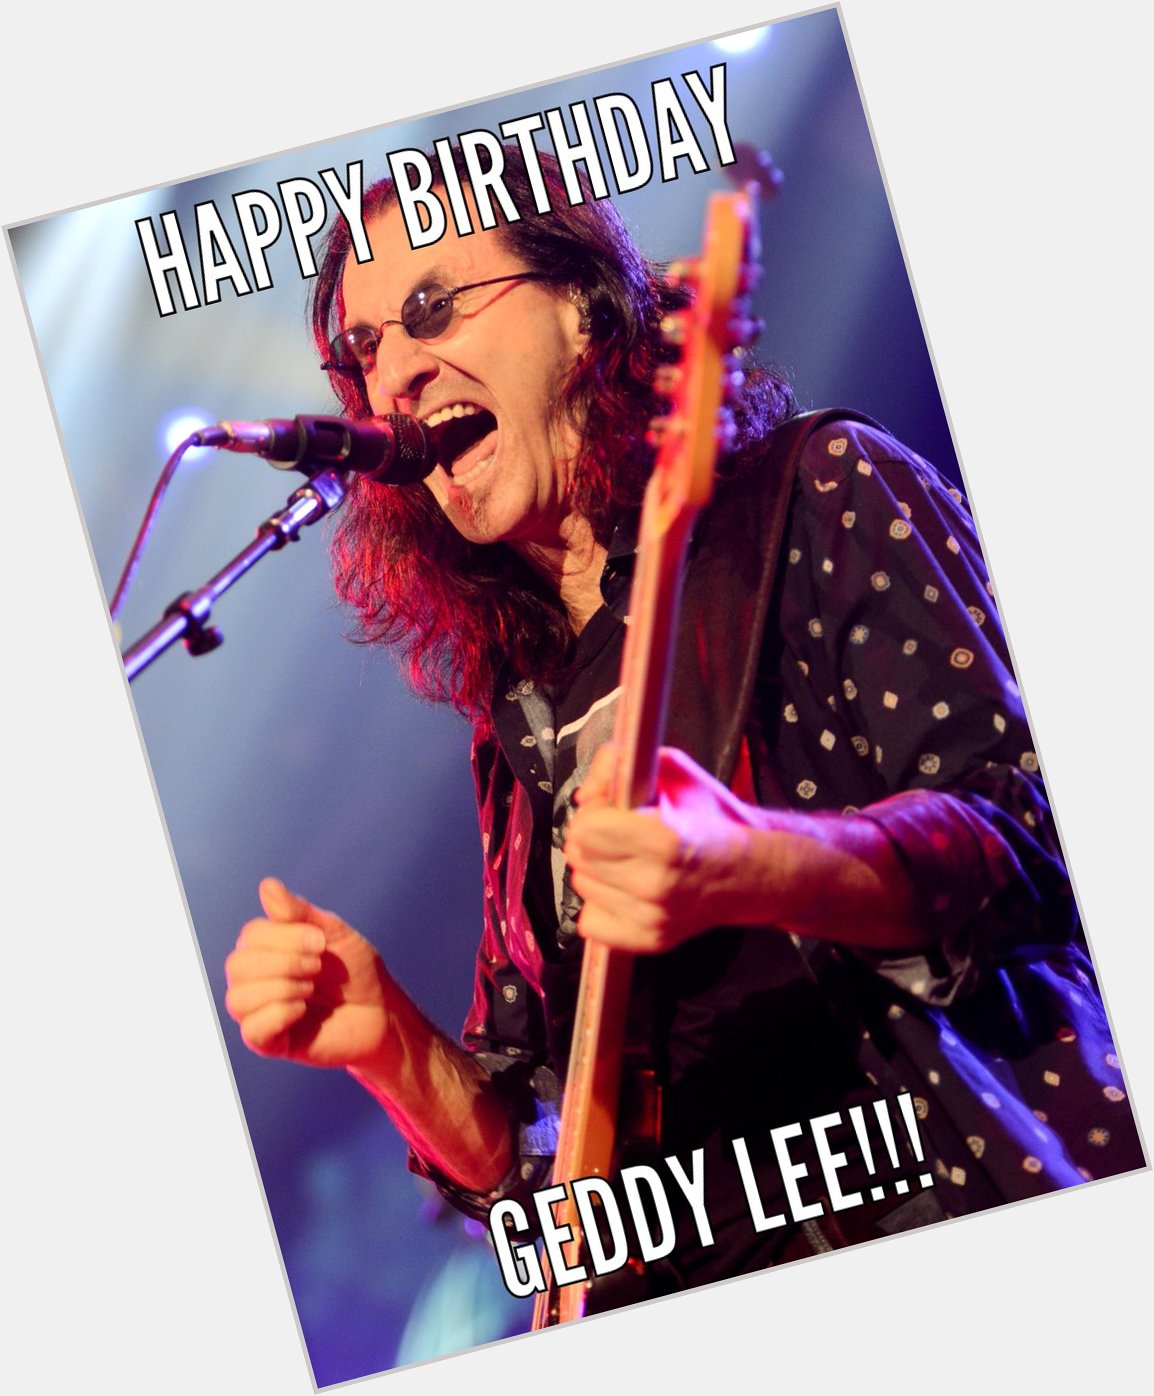 Happy 62nd Birthday to RUSH bassist/frontman GEDDY LEE! 